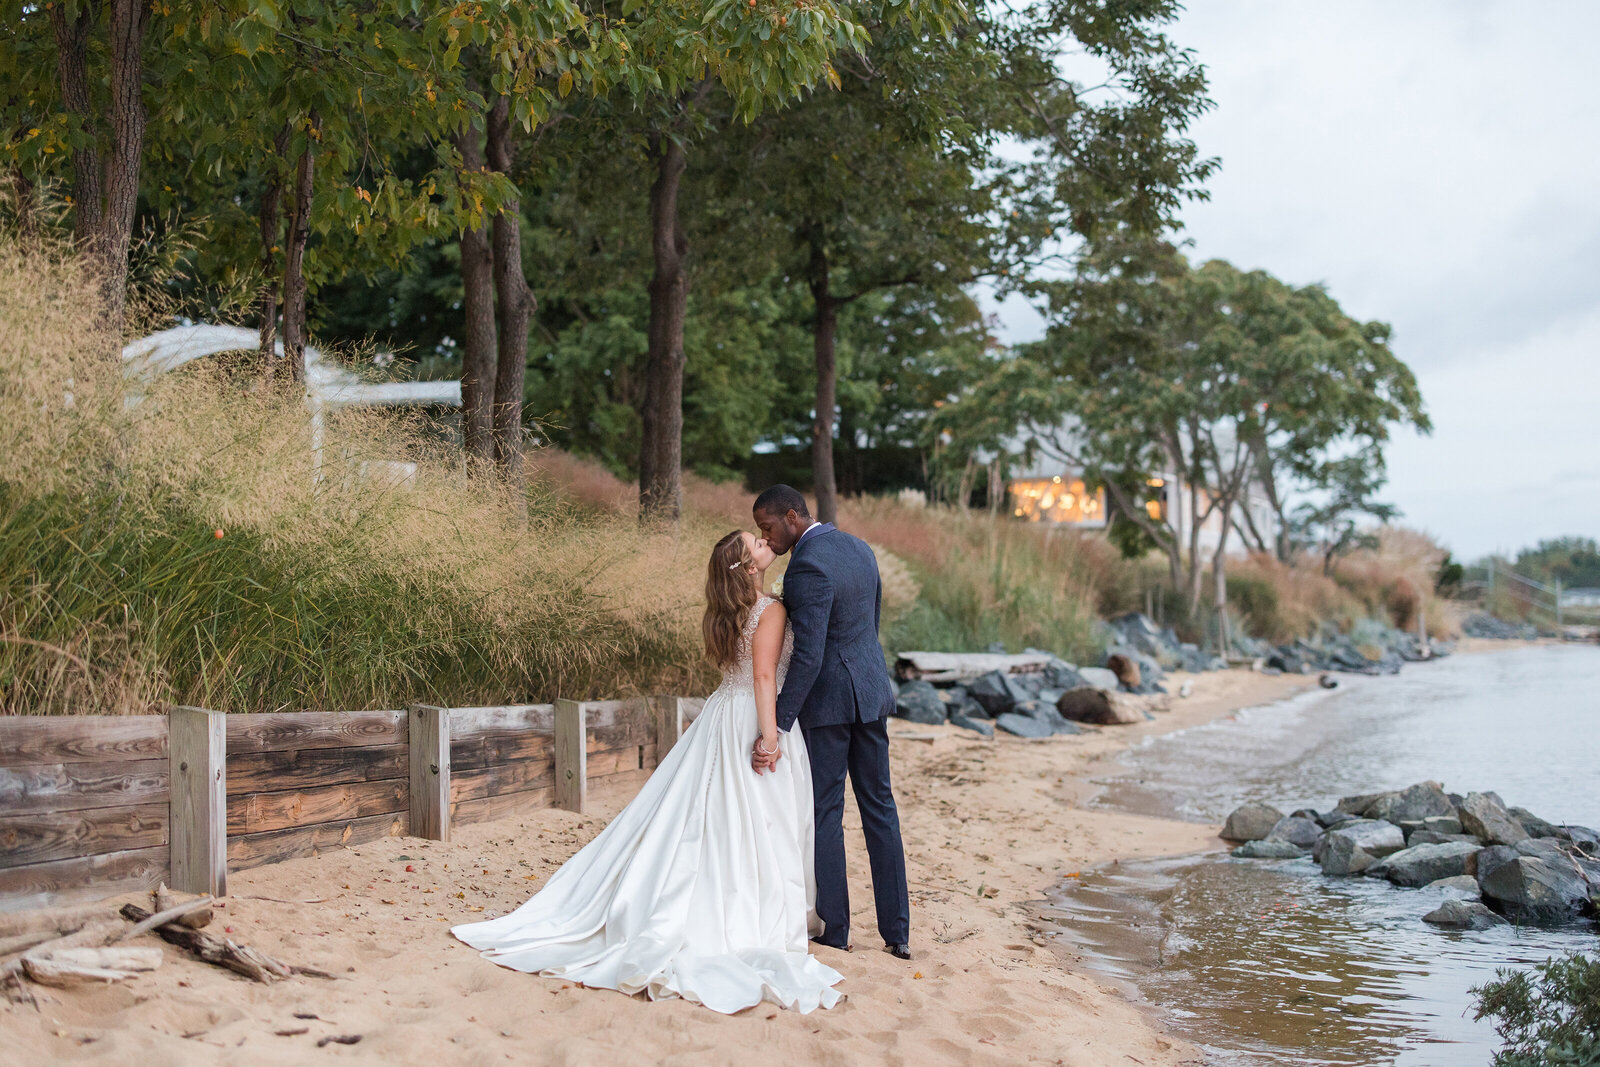 Chesapeake Bay Beach Club wedding photo of couple on beach by Annapolis Maryland photographer Christa Rae Photography